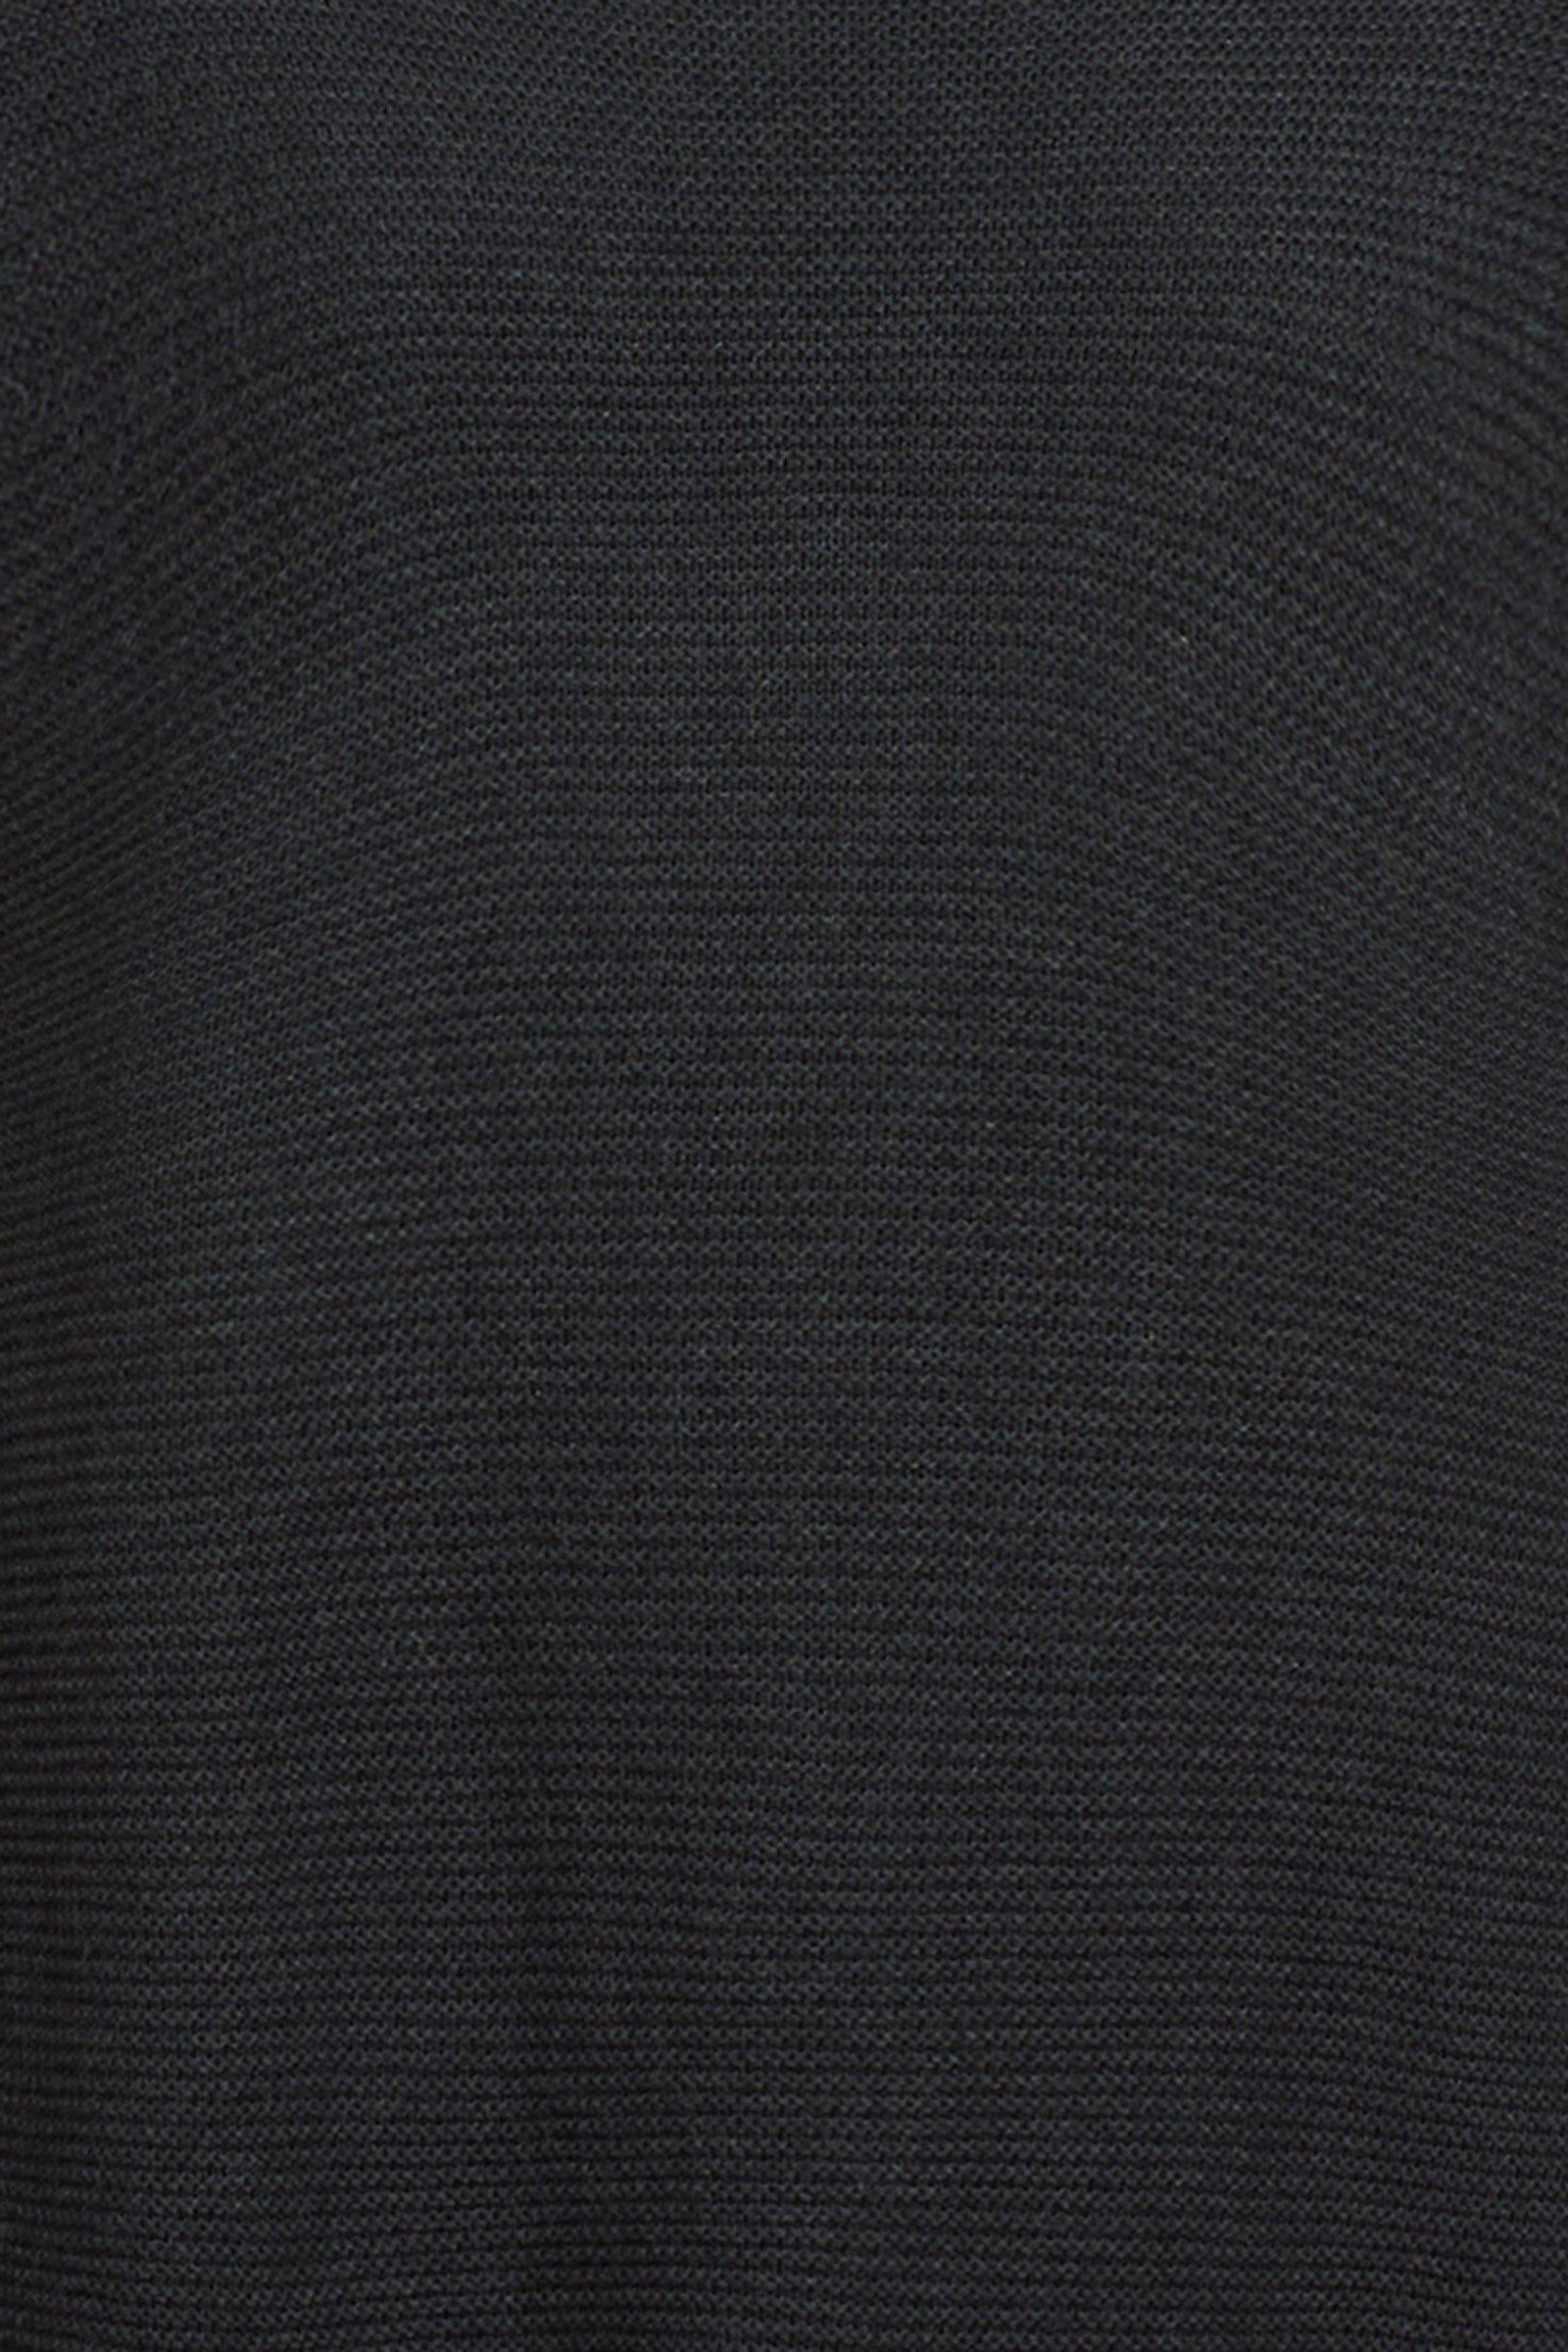 Britons Cardigan - Graphite - eb&ive Clothing - Knit Cardigan Long